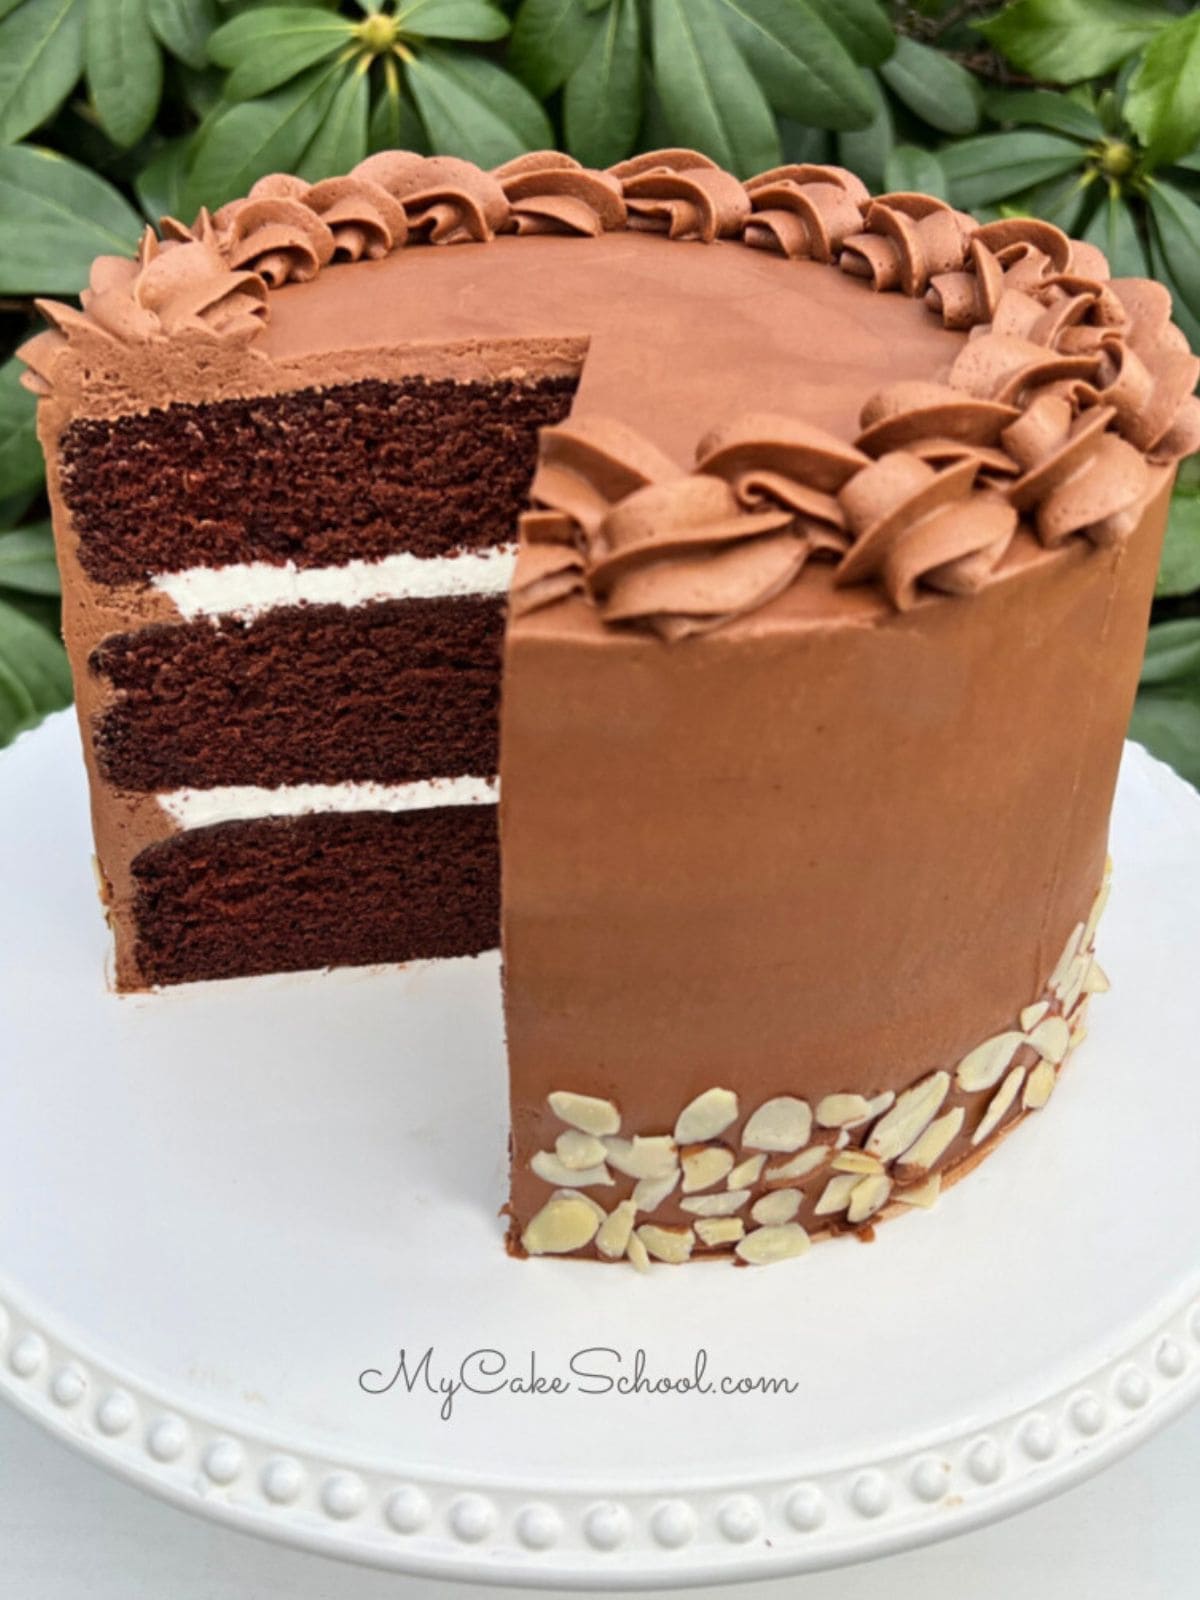 Sliced Chocolate Almond Cake on a cake pedestal.